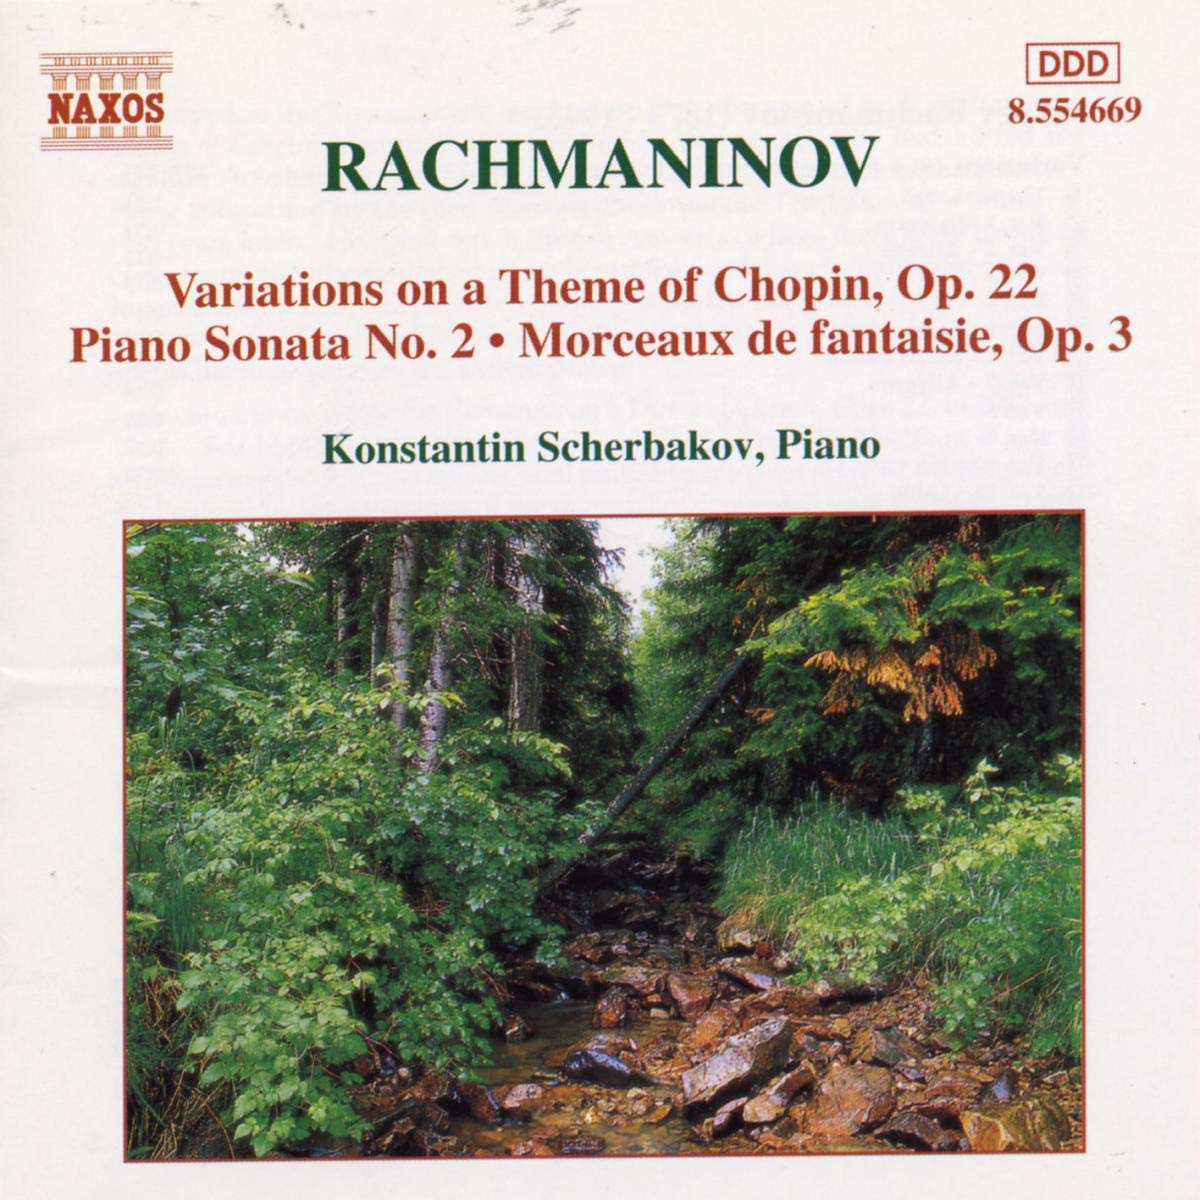 RACHMANINOV: Piano sonata no. 2